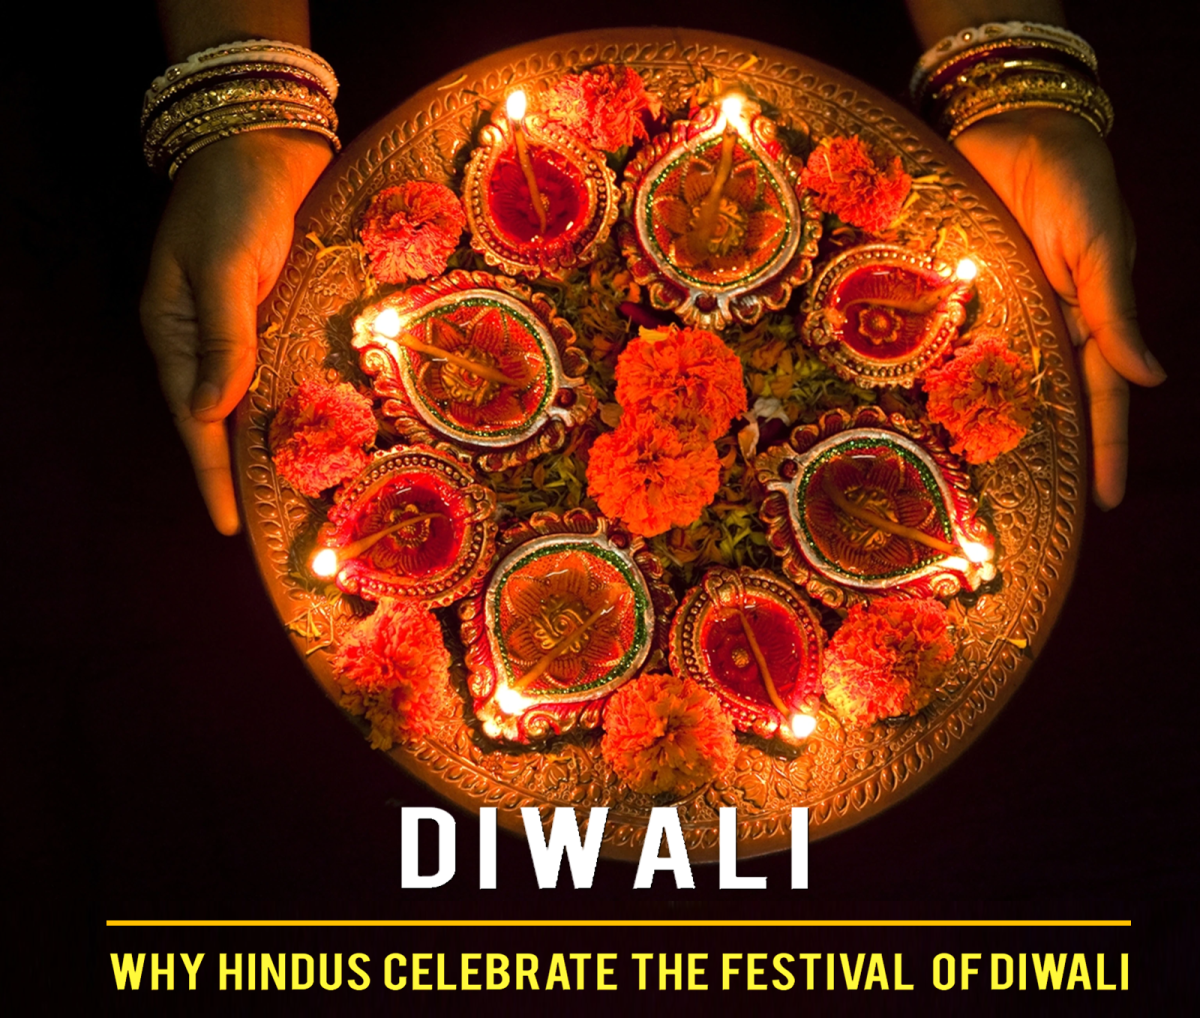 15 Hindu Beliefs to Celebrate Diwali Festival